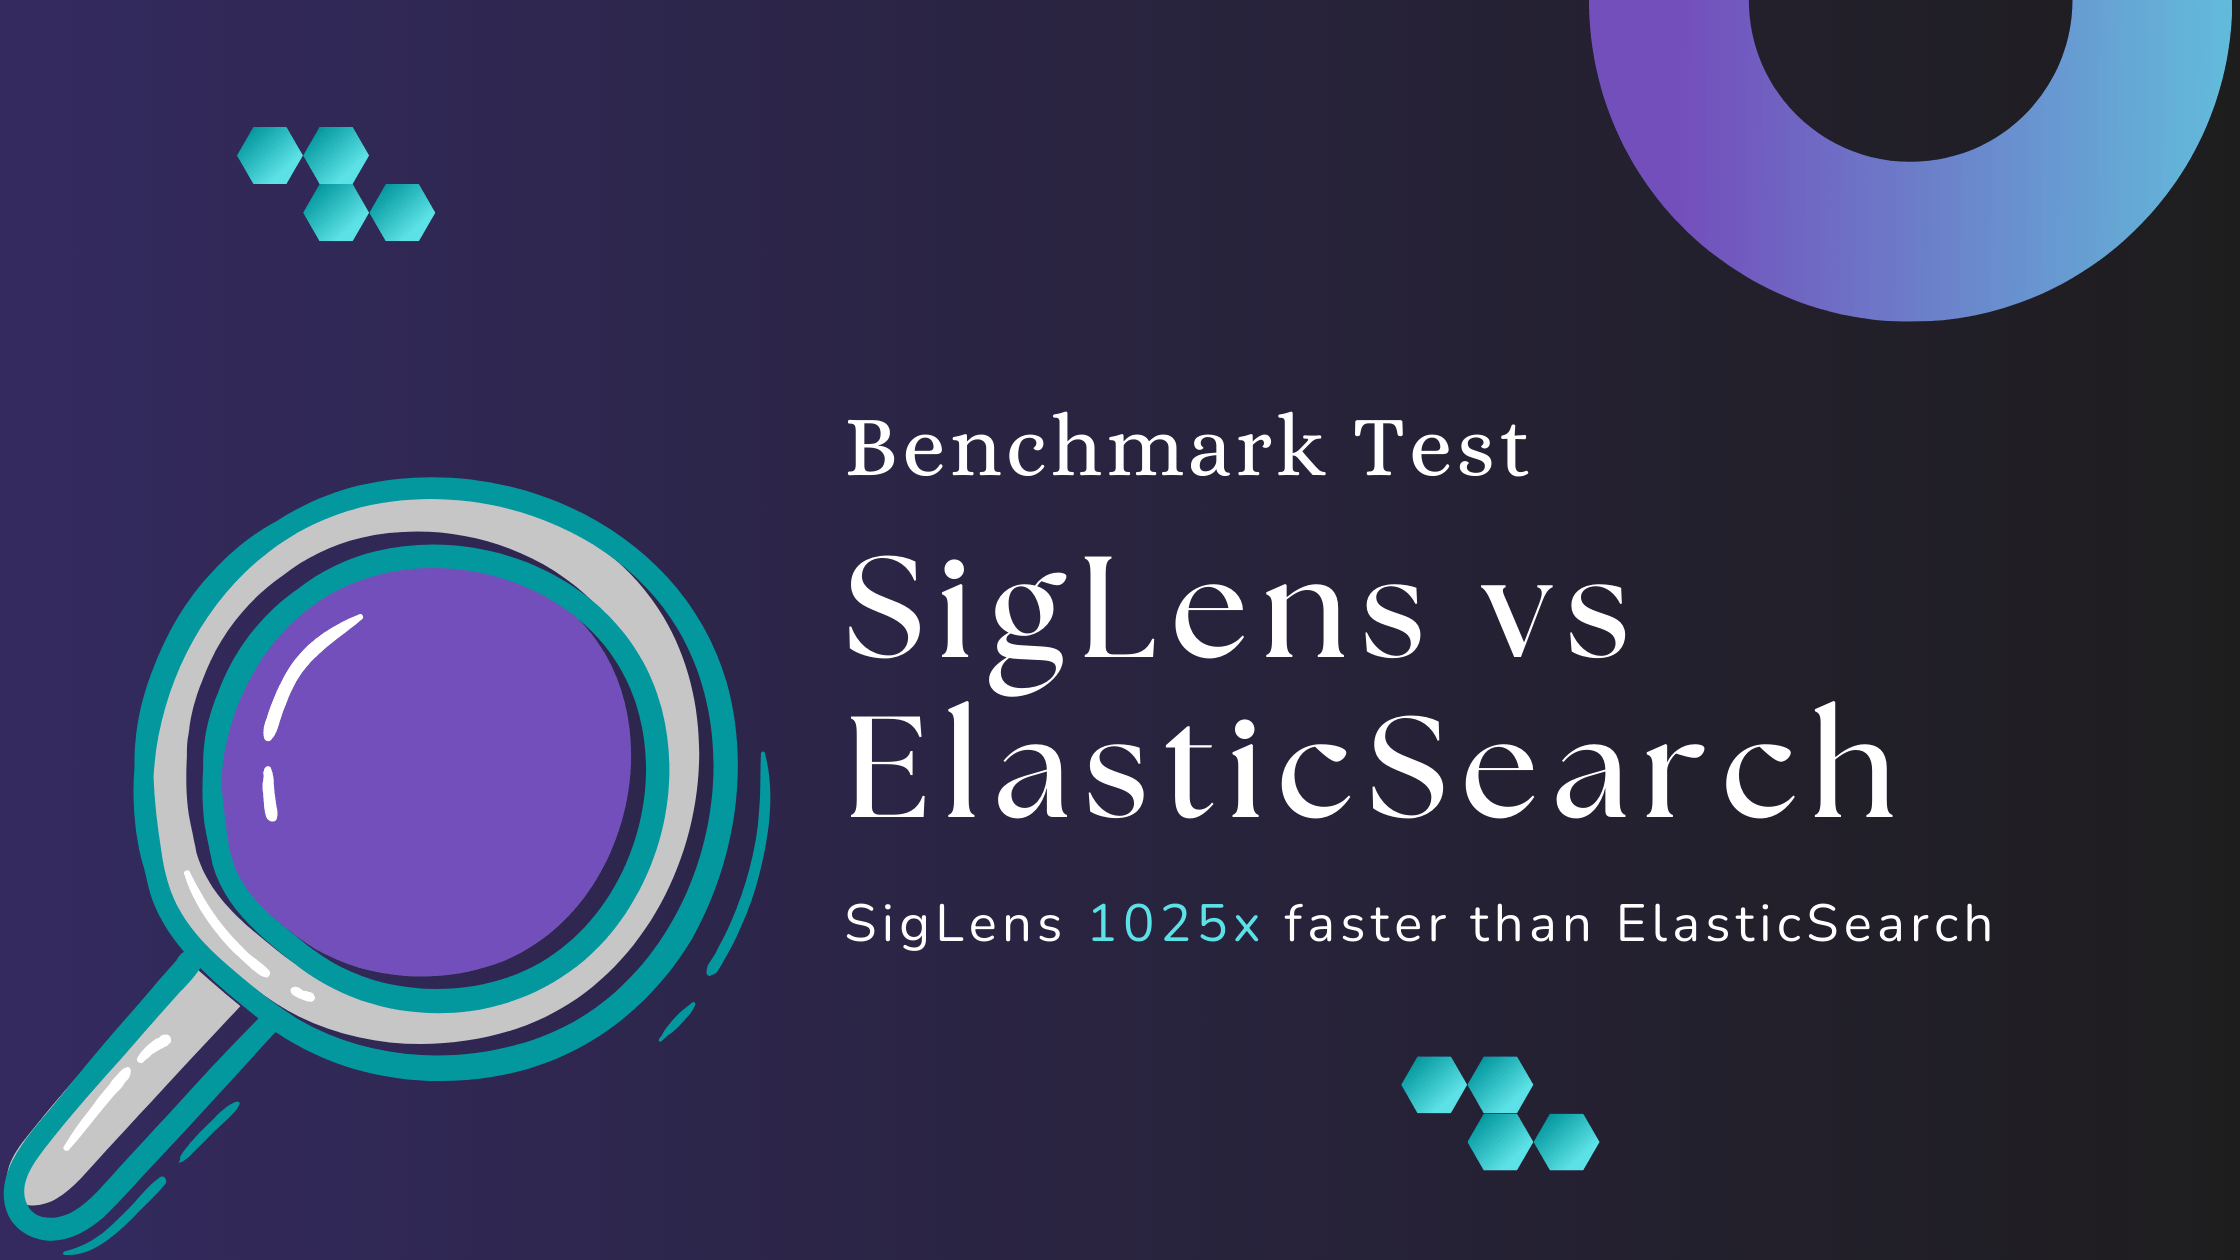 SigLens 1025x faster than Elasticsearch